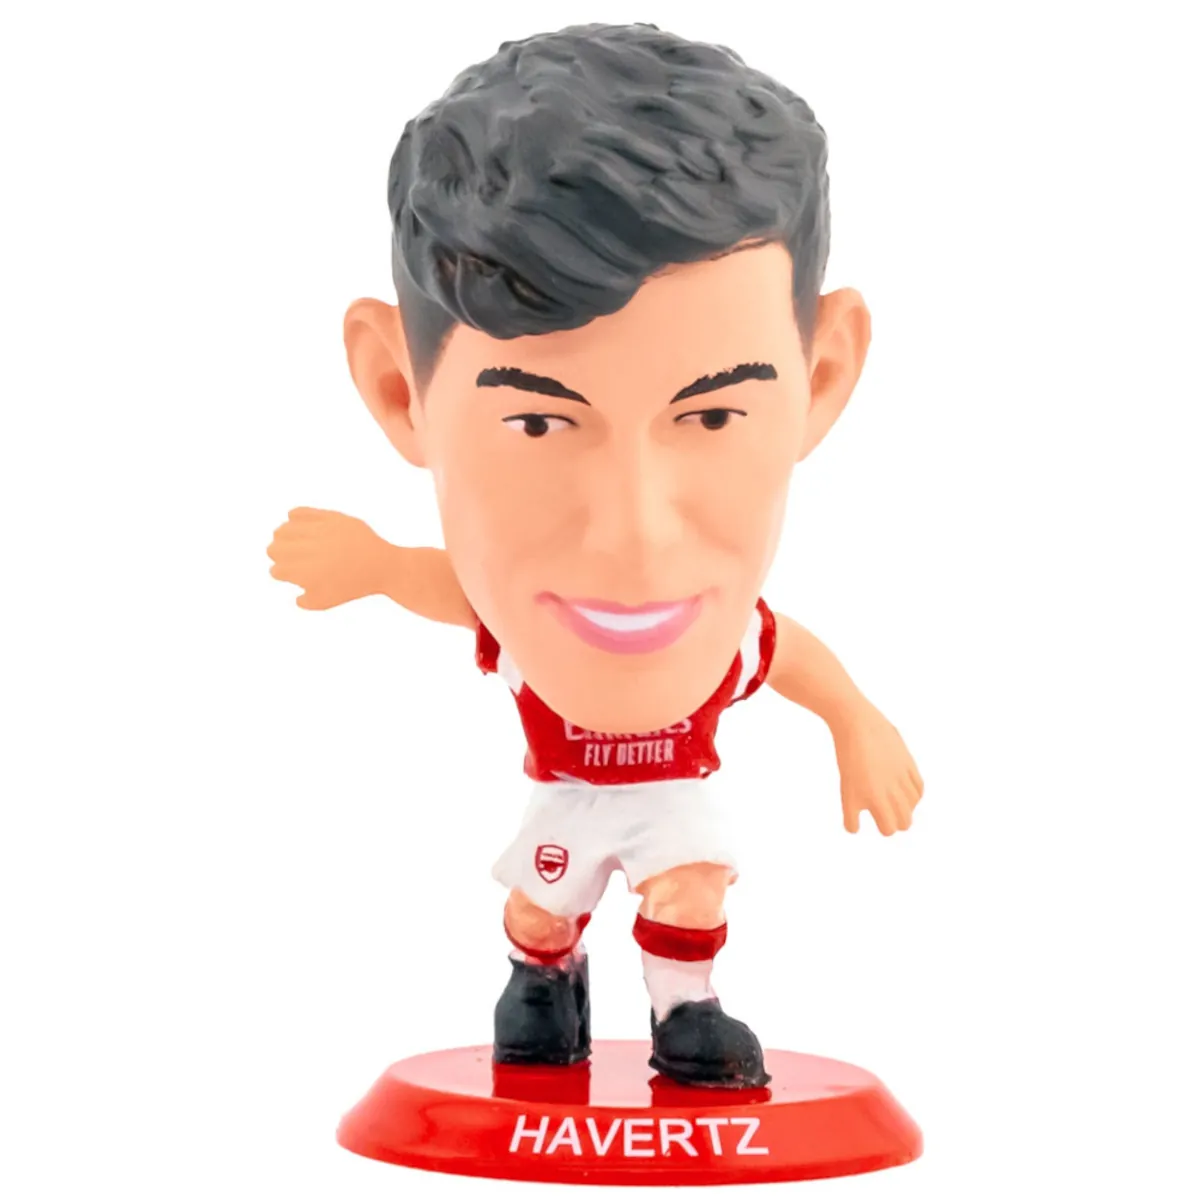 TM-04895 Arsenal F.C. SoccerStarz Collectable Figures (3-Pack) - Havertz, Rice & Trossard 2